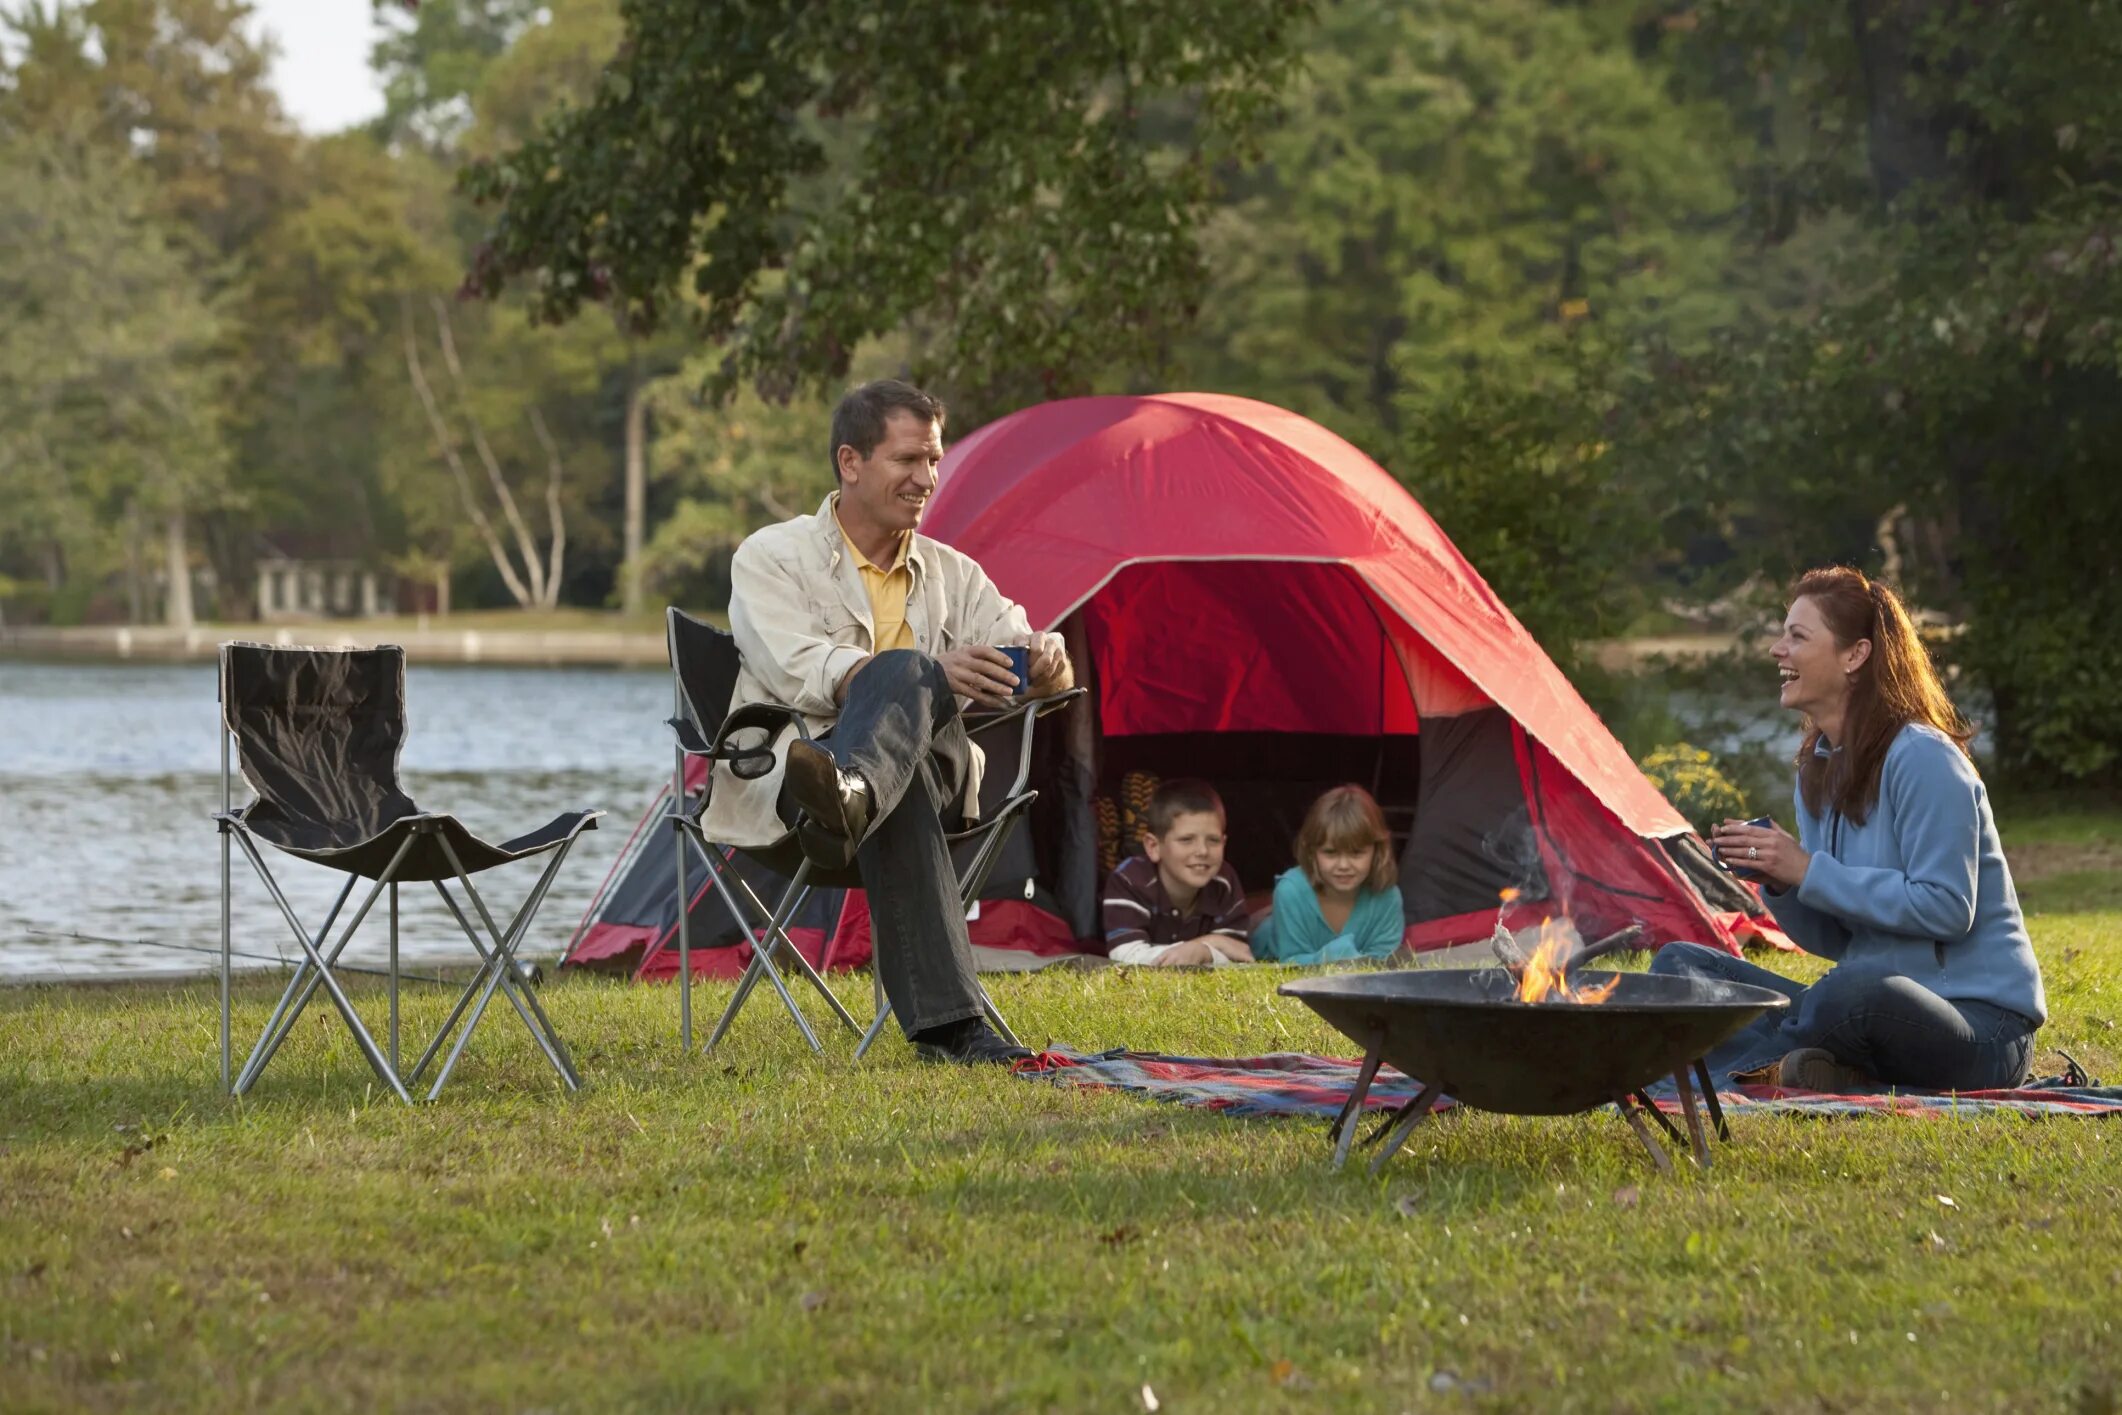 Палатка на природе. Отдыхаем на природе. Пикник с семьей на природе. Пикник на природе с палатками.